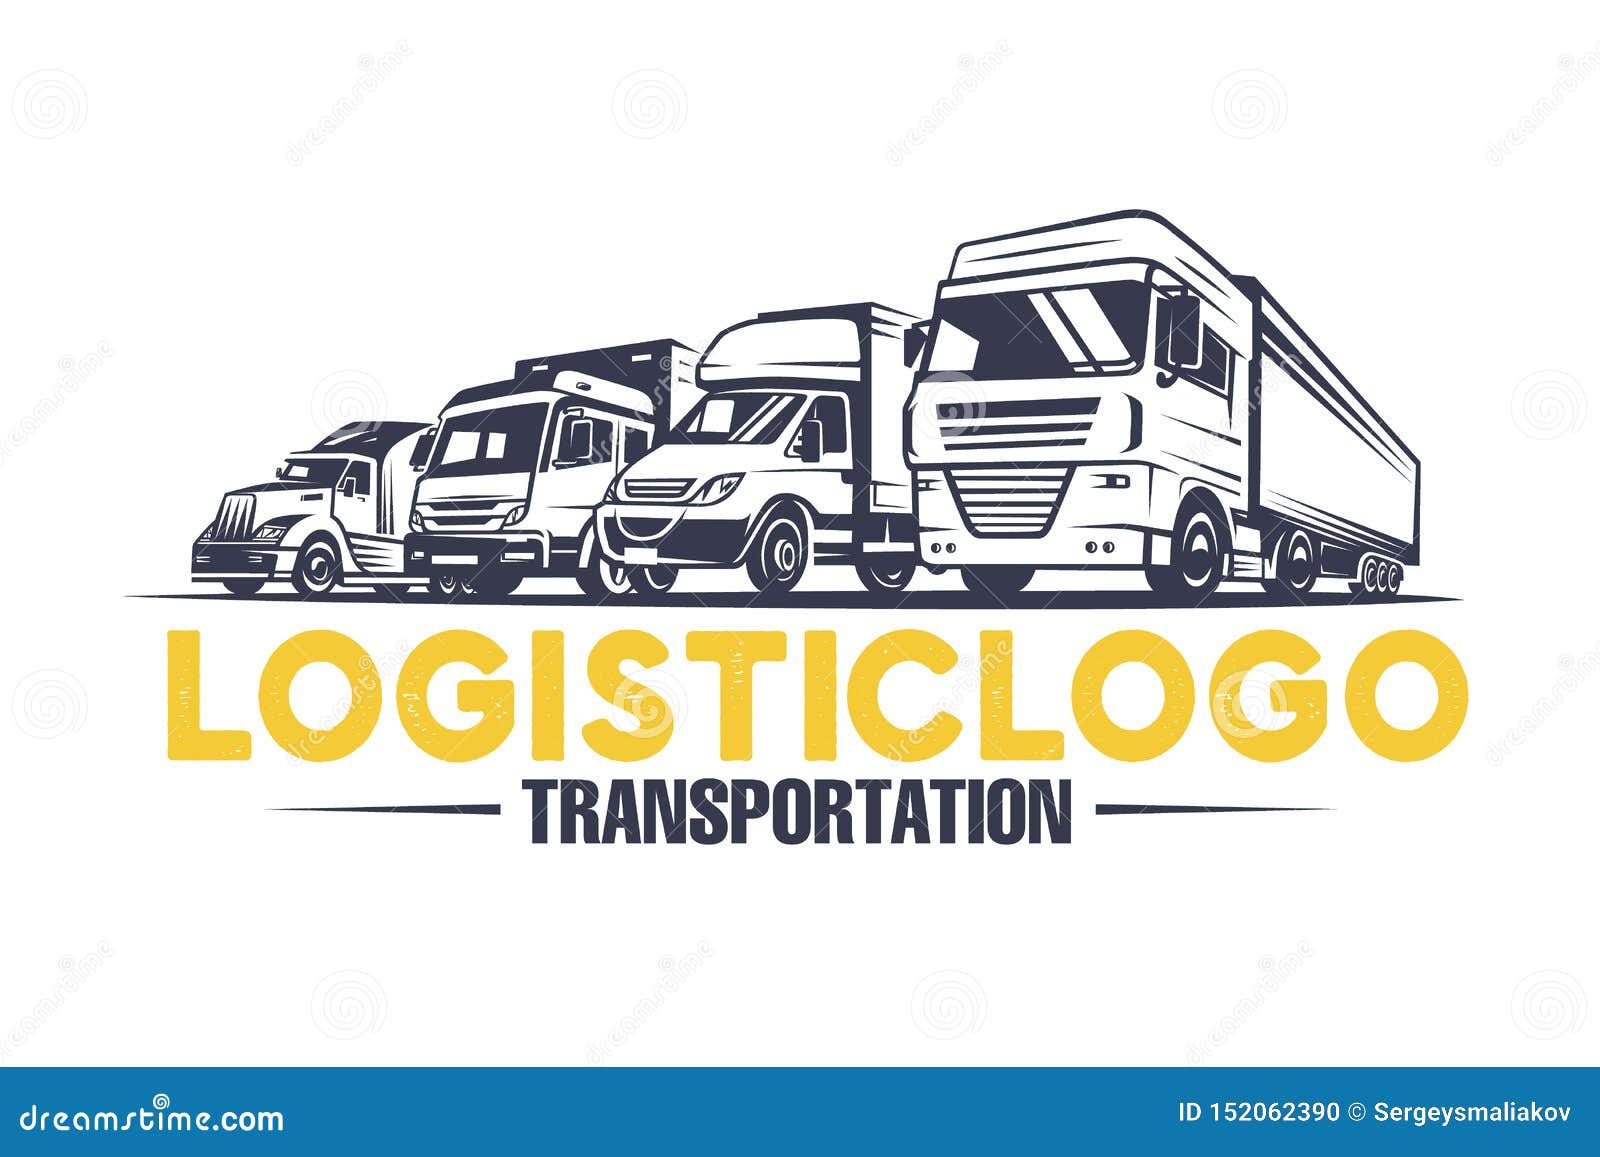 Logistic Logo. Transportation Stock Vector - Illustration of icon ...